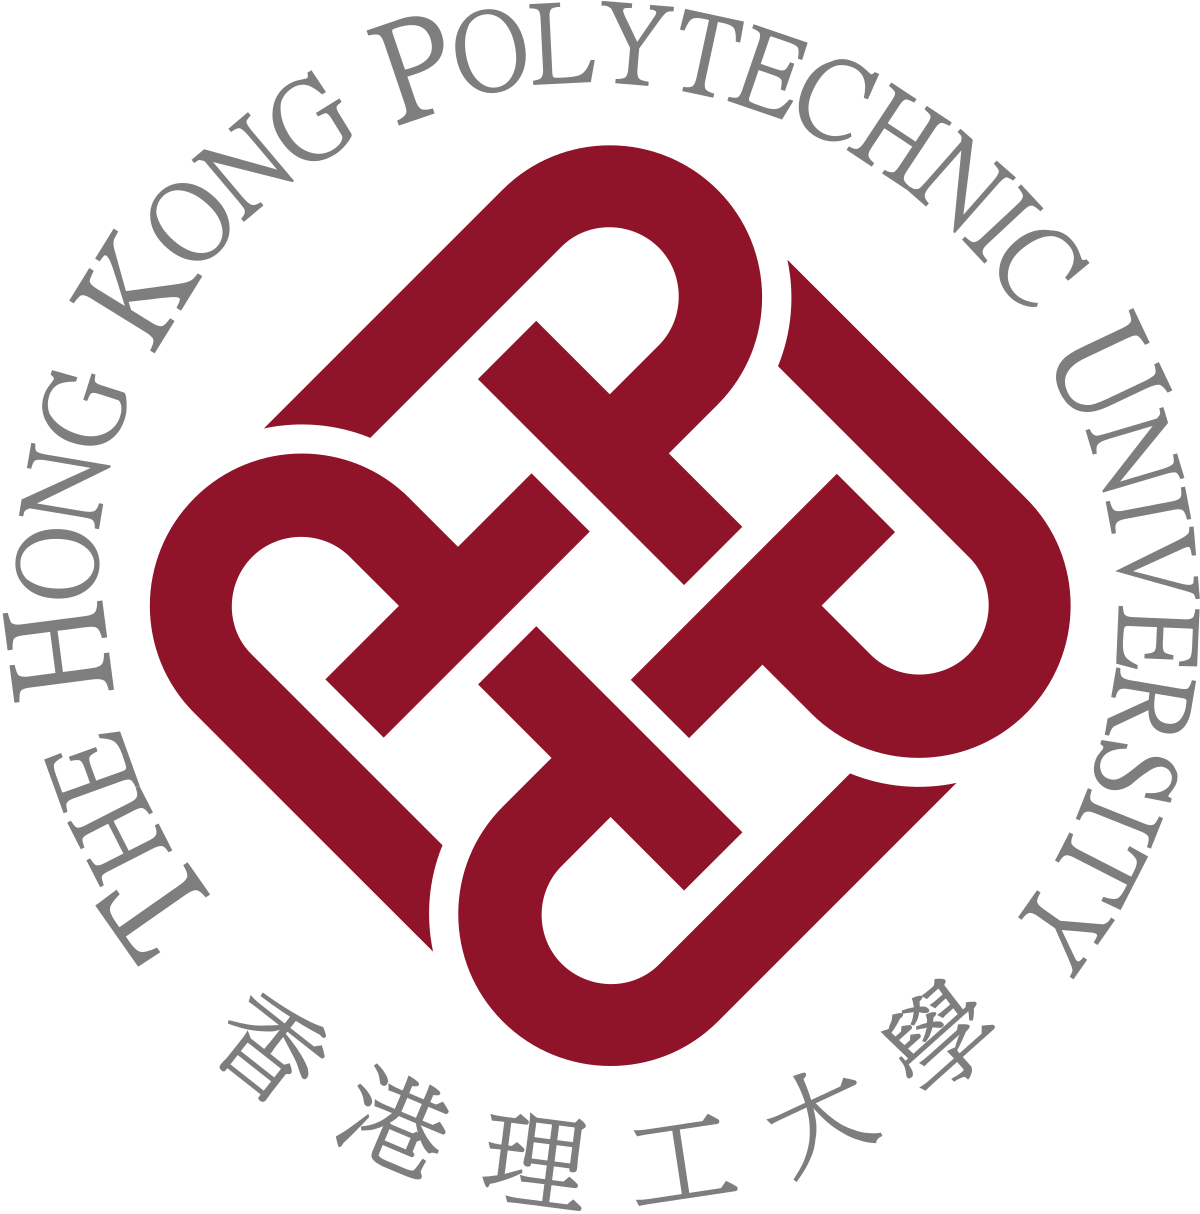 The Hong Kong Polytechnic University Hong Kong